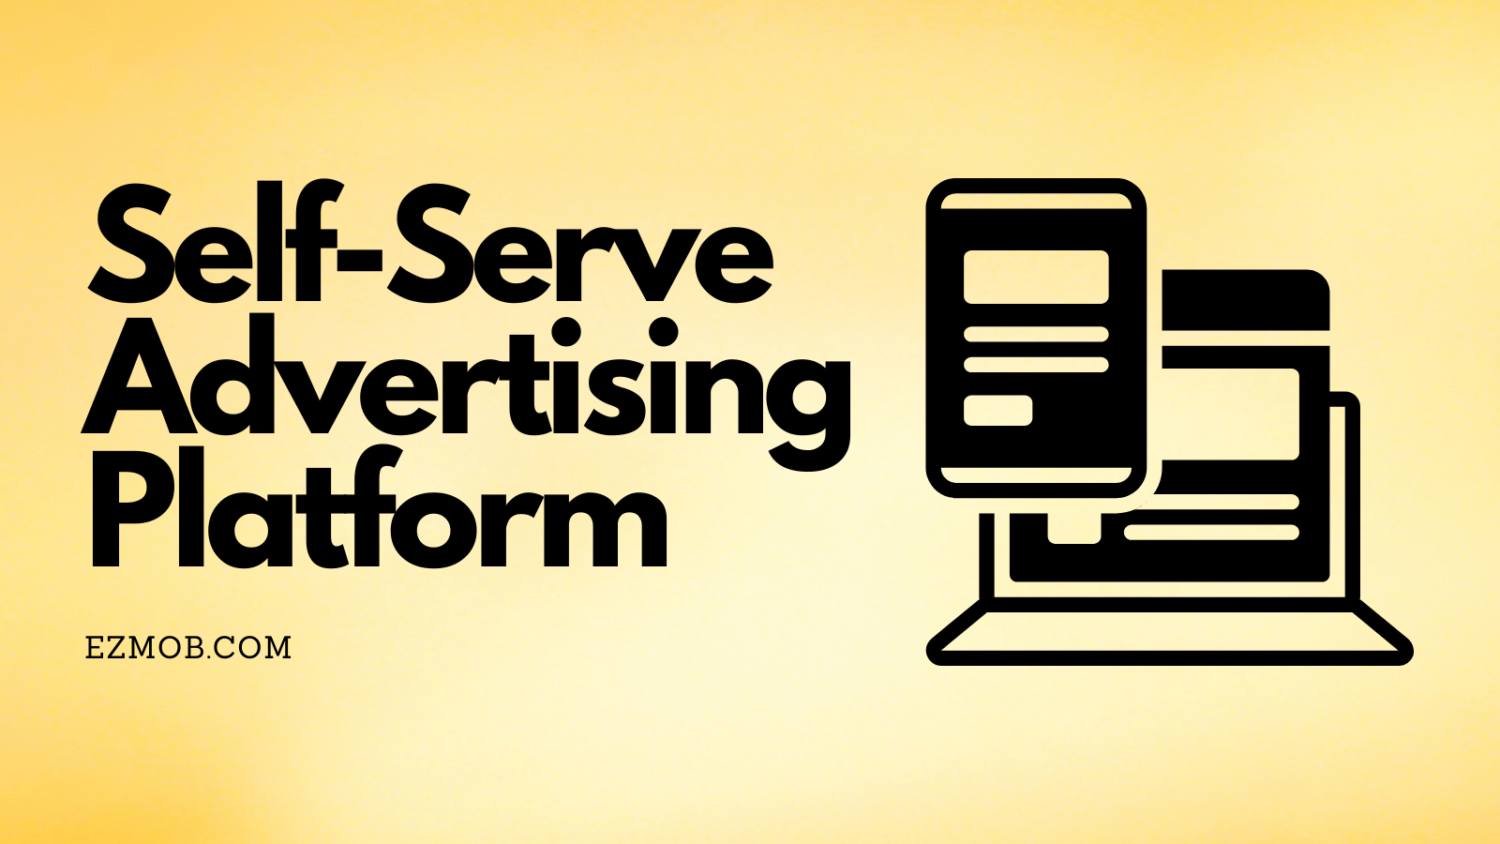 Self serve advertising platform